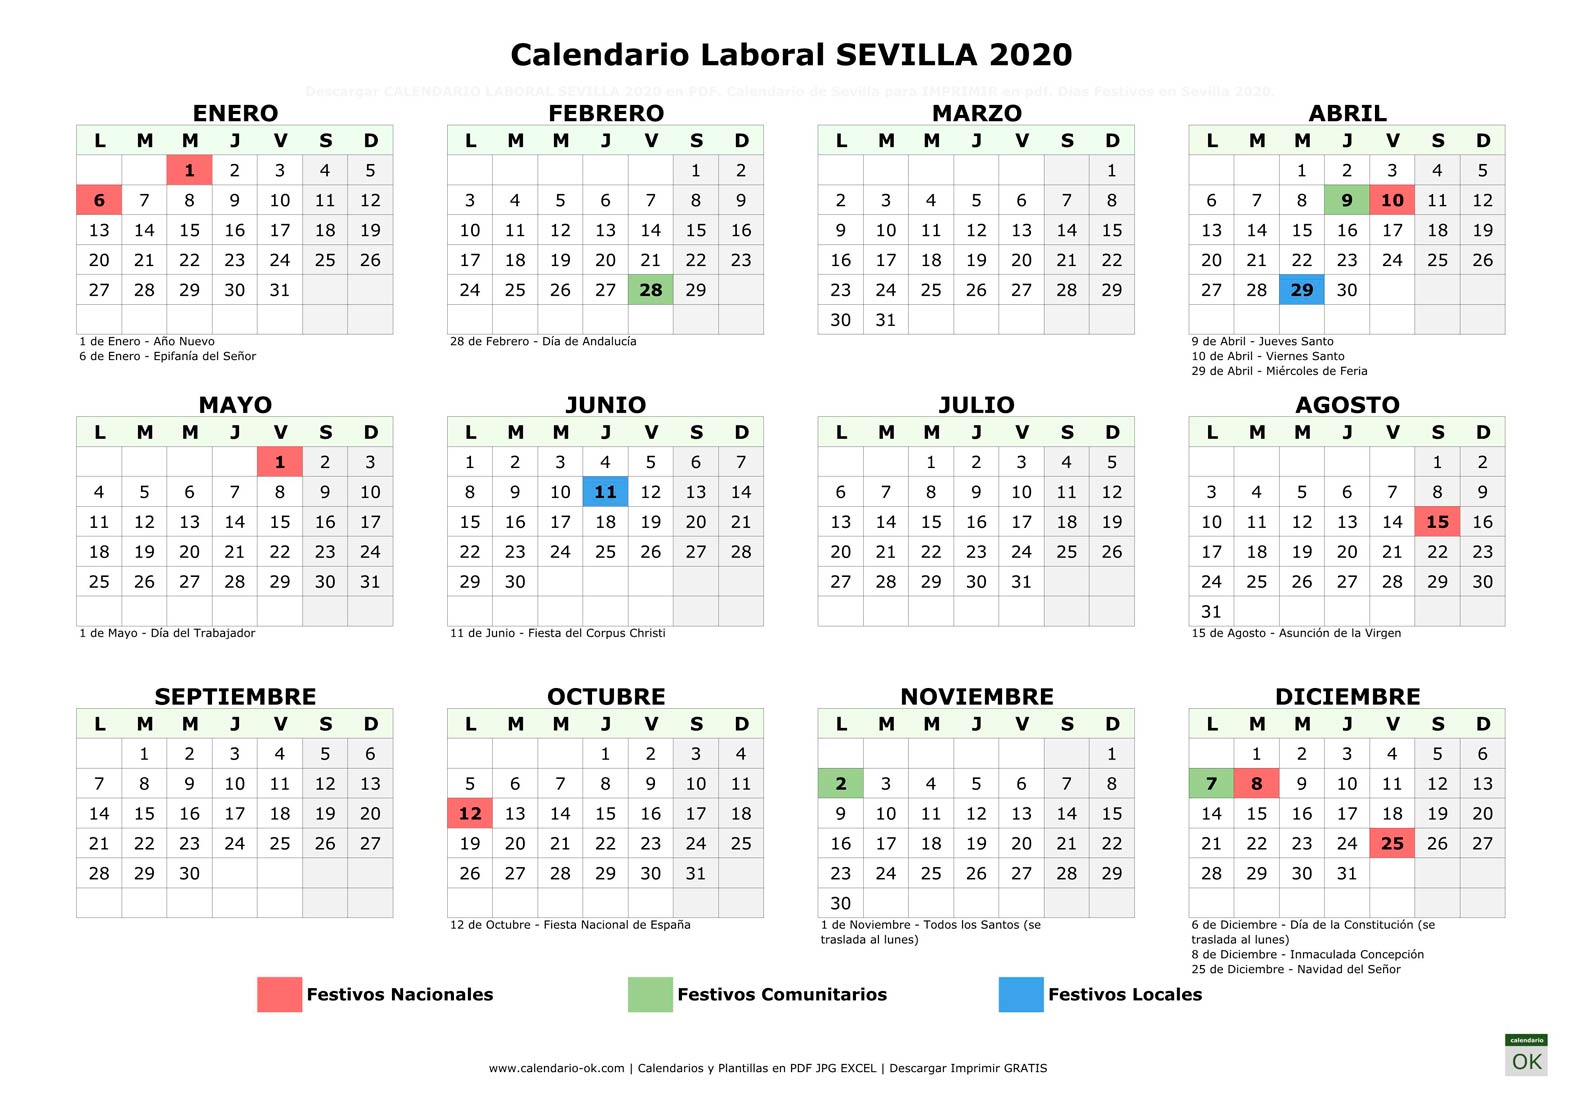 Calendario Laboral SEVILLA 2020 horizontal